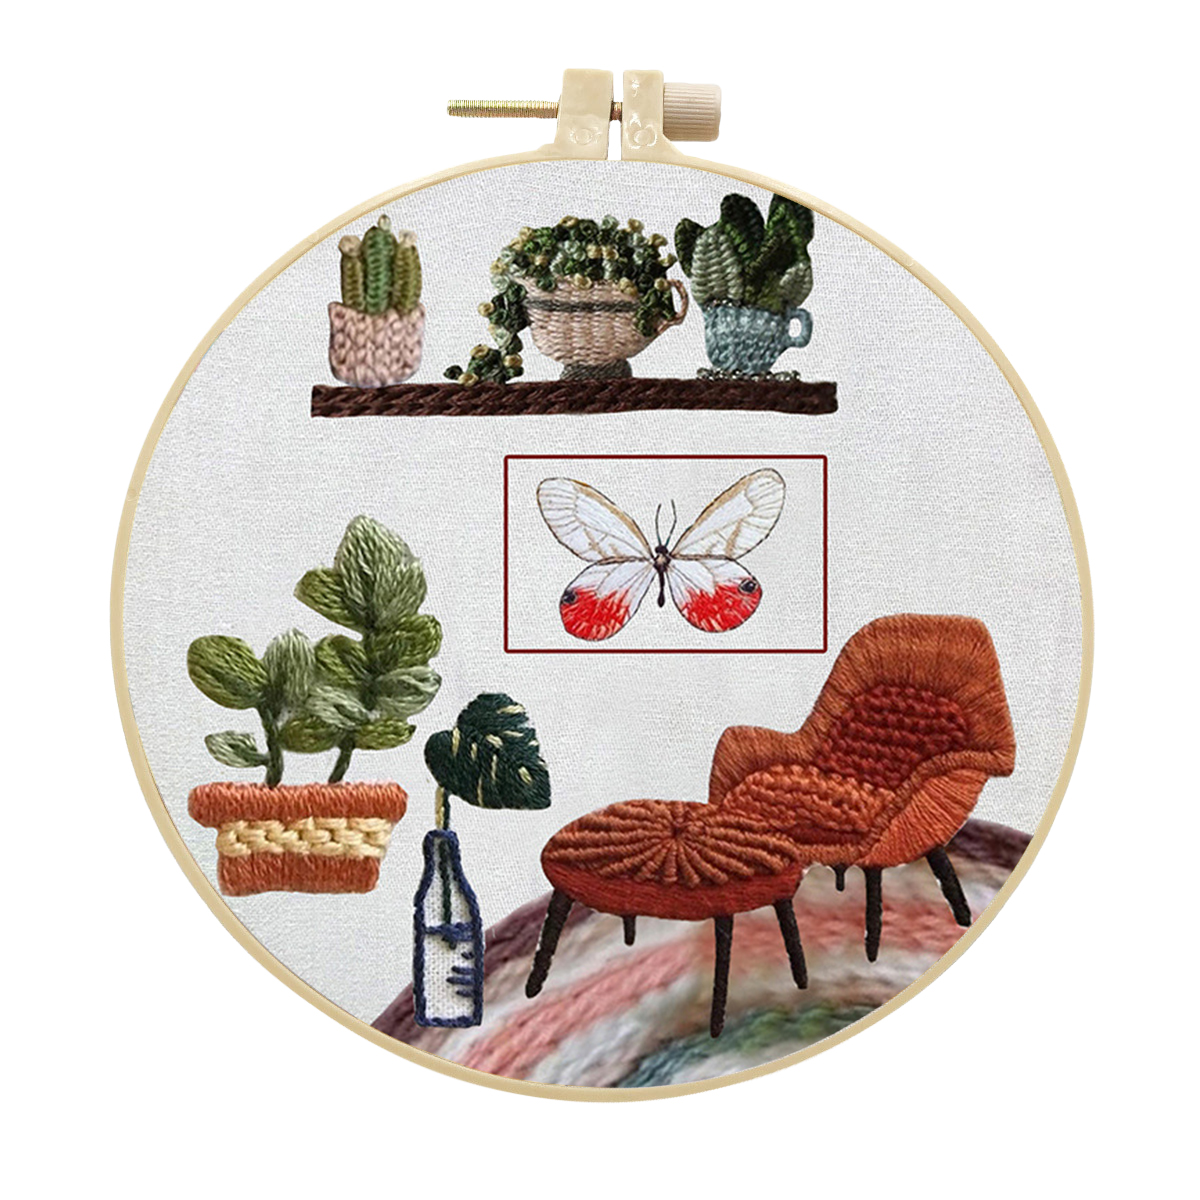 Handmade Embroidery Kit Cross stitch kit for Adult Beginner - Sweet Bedroom Pattern